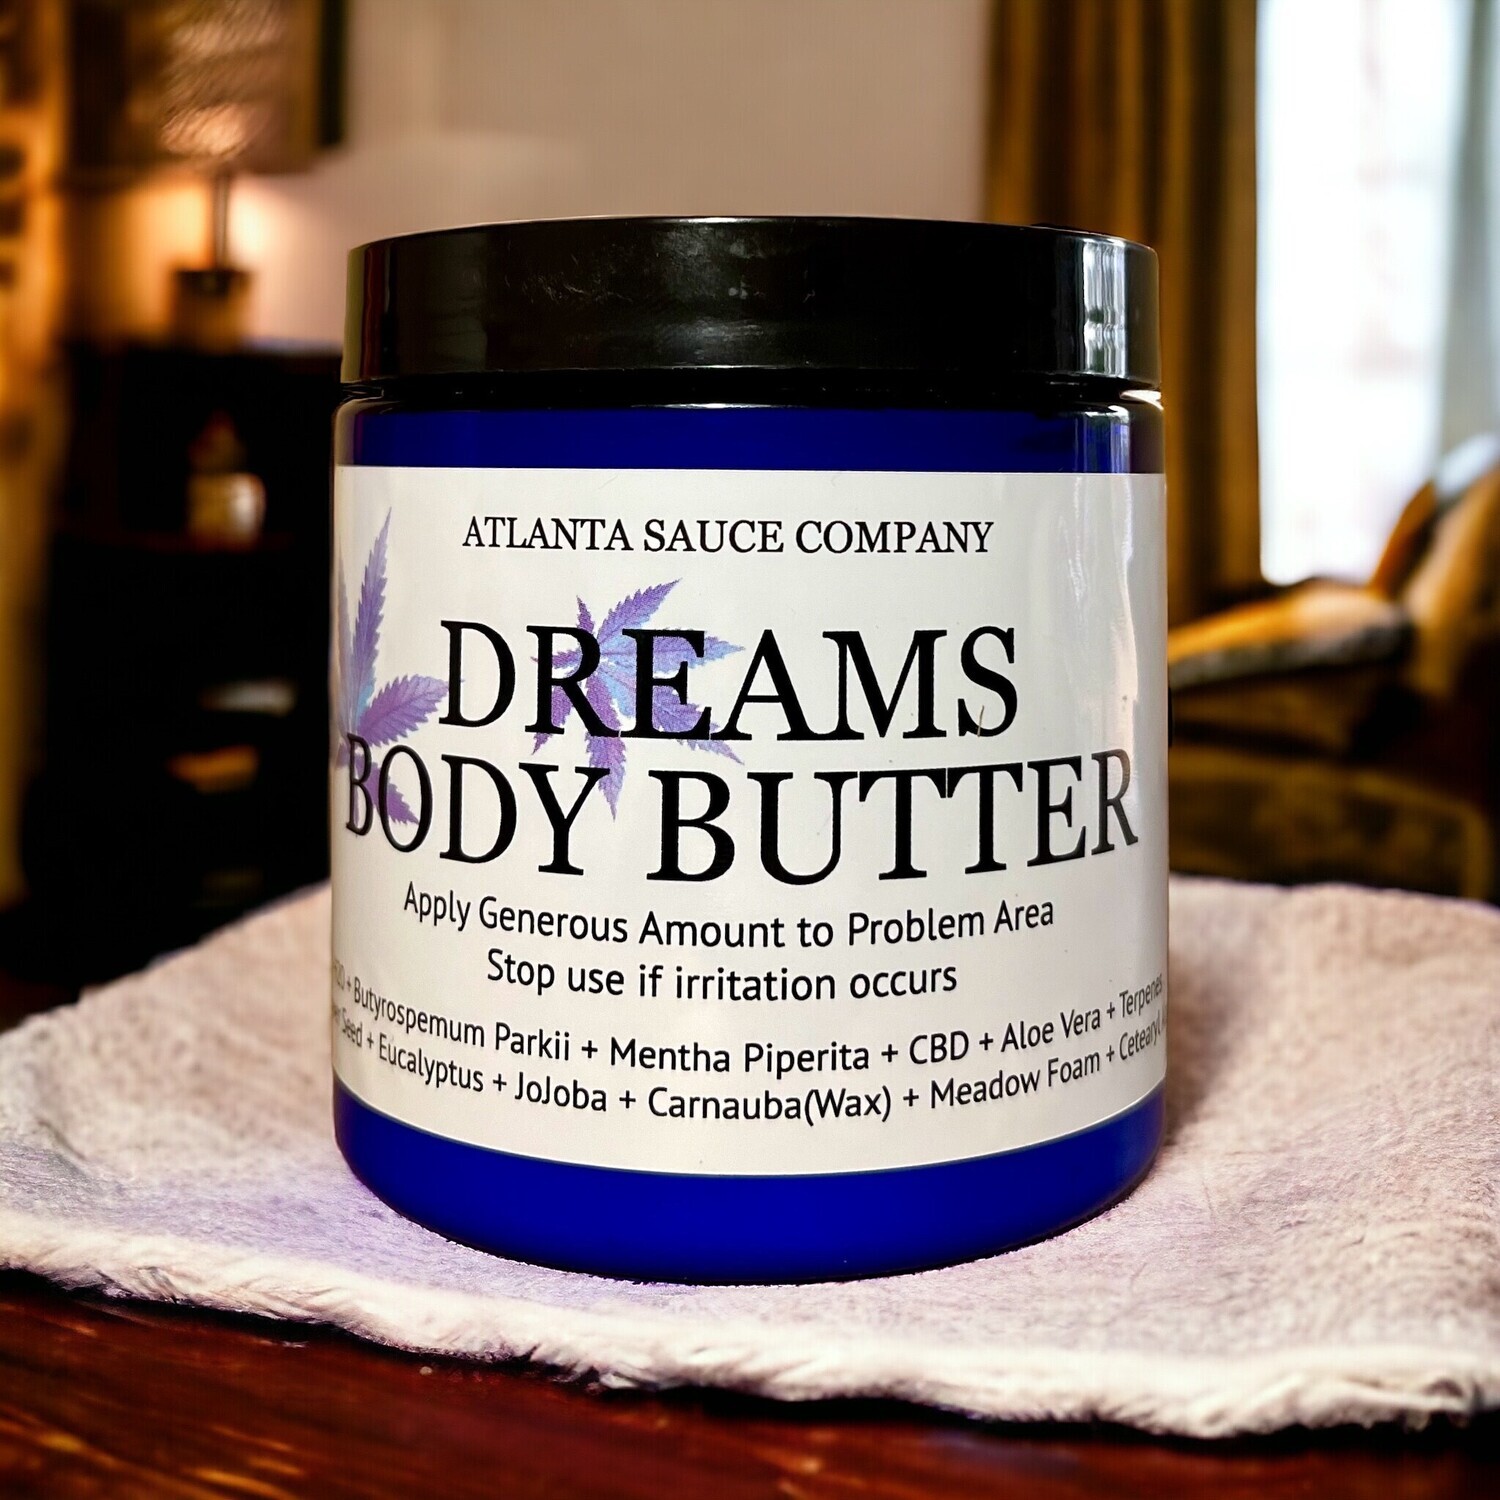 Dreams Body Butter 4 oz